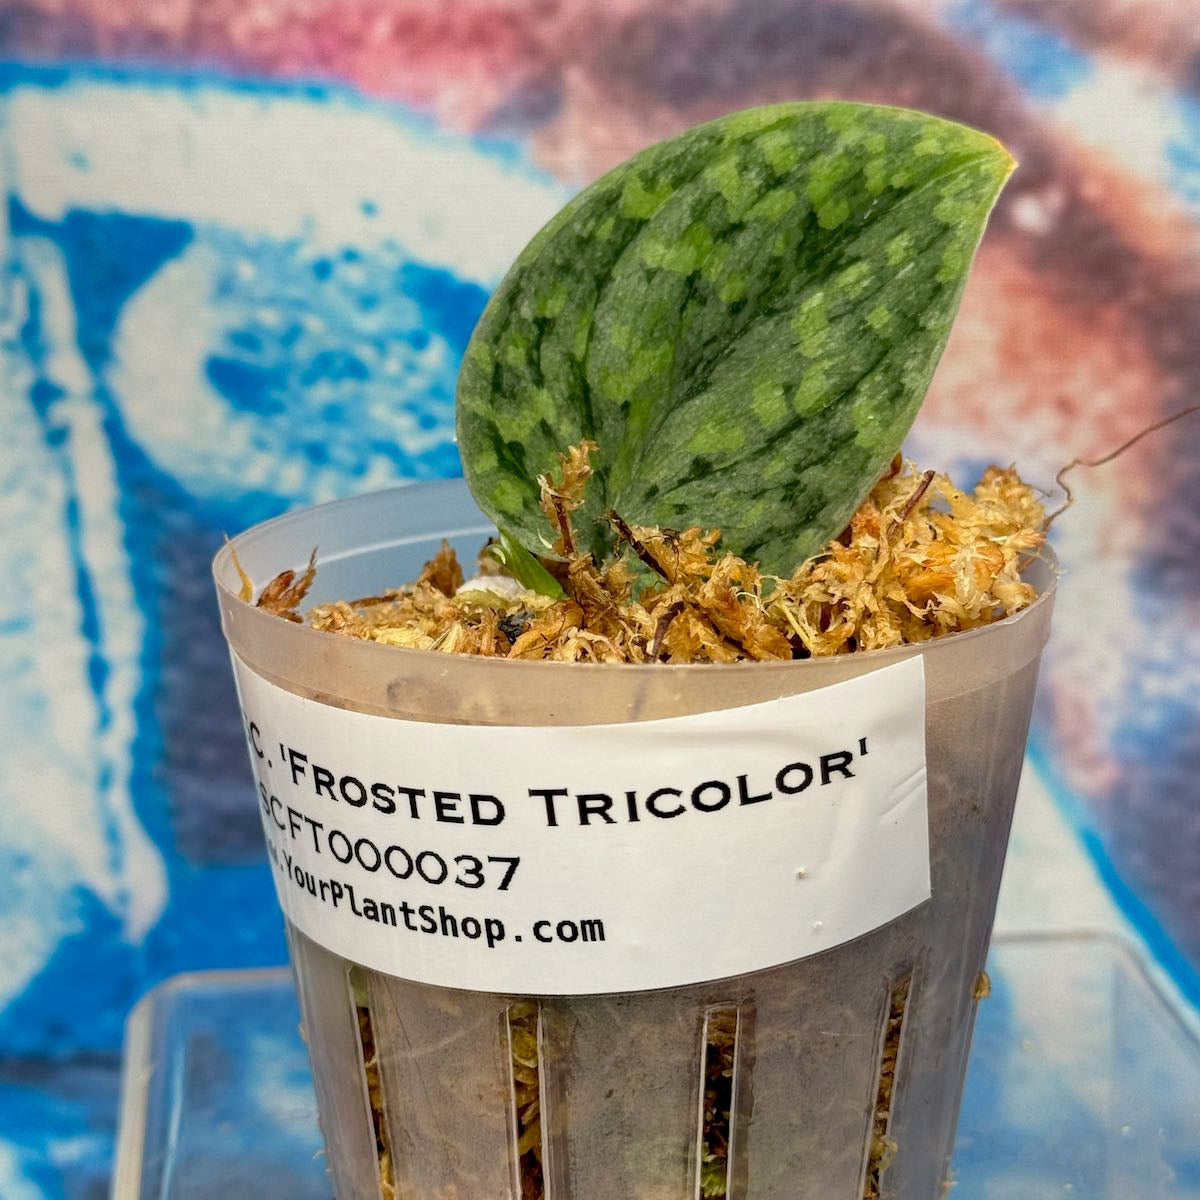 Scindapsus 'Frosted Tricolor' - #SCFT000037